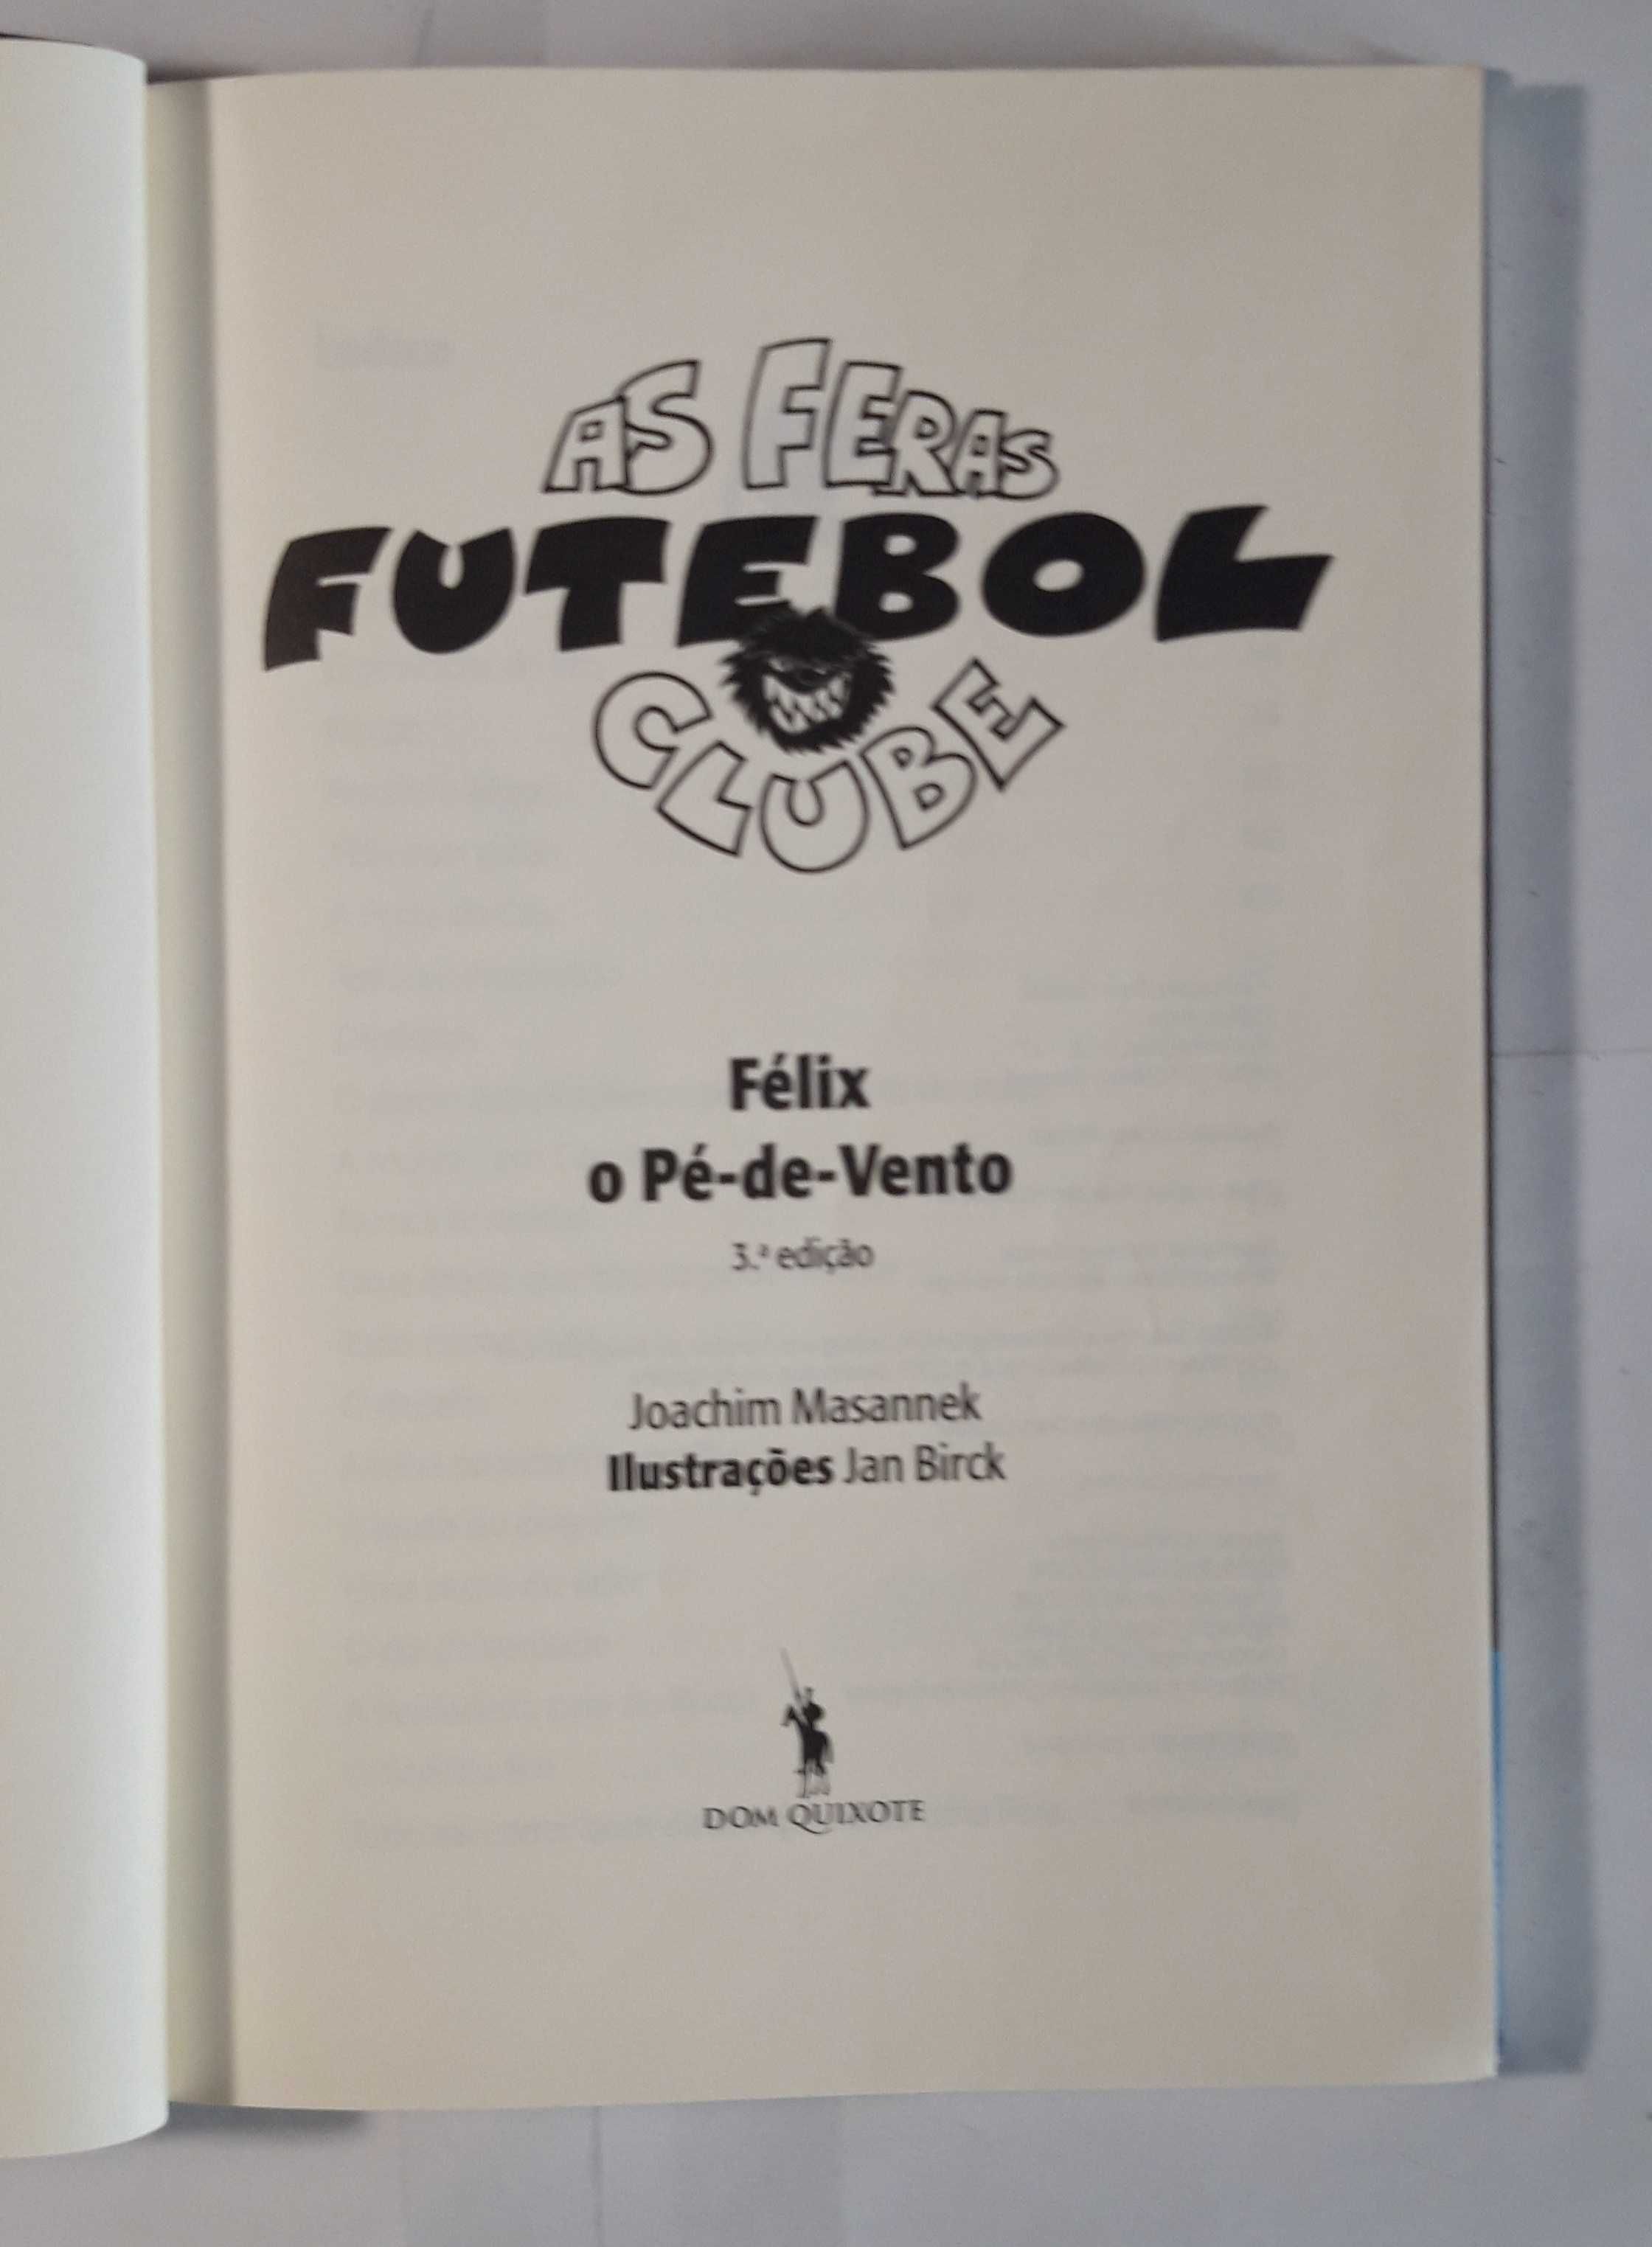 Livro- Ref CxC  - Joachim Masannek - As Feras Futebol Clube: Félix